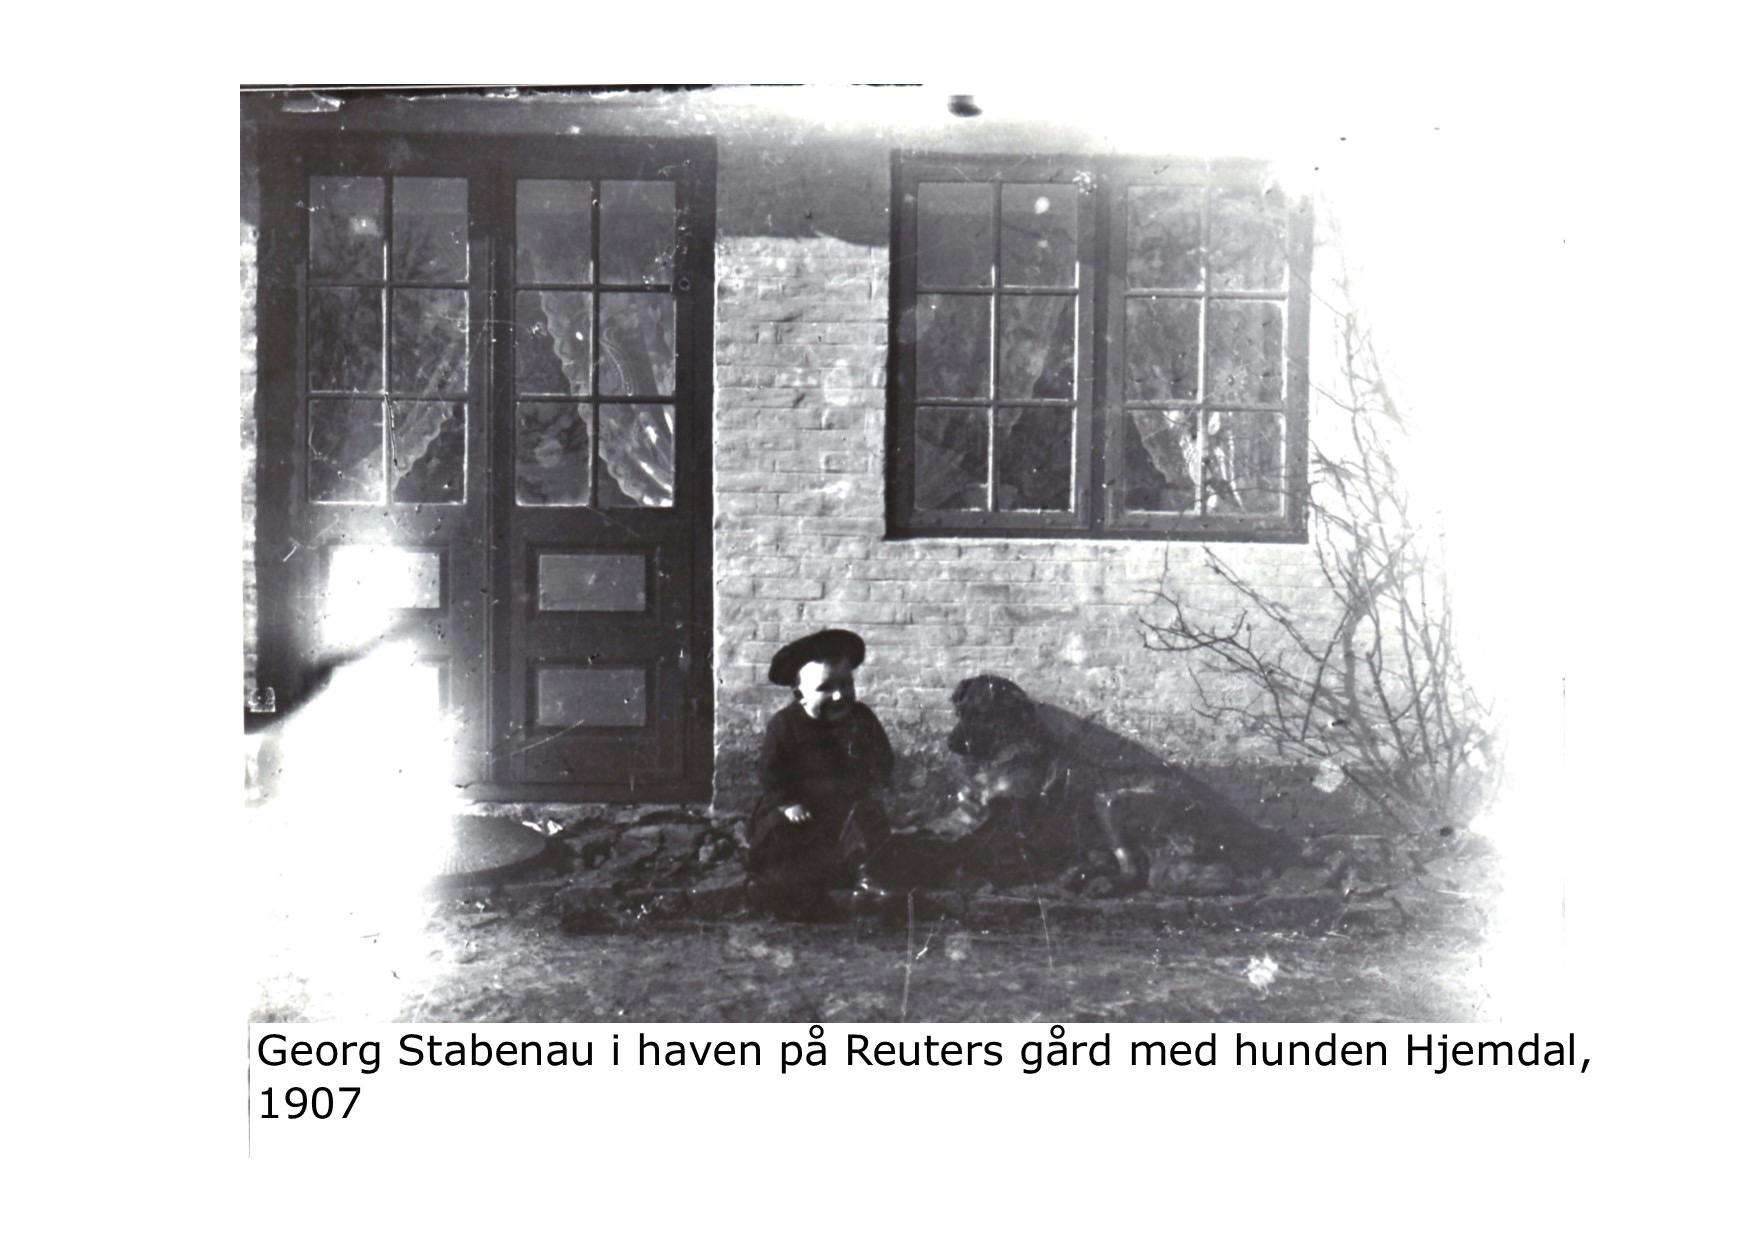 Georg Stabenau 1907 i Reuters gård